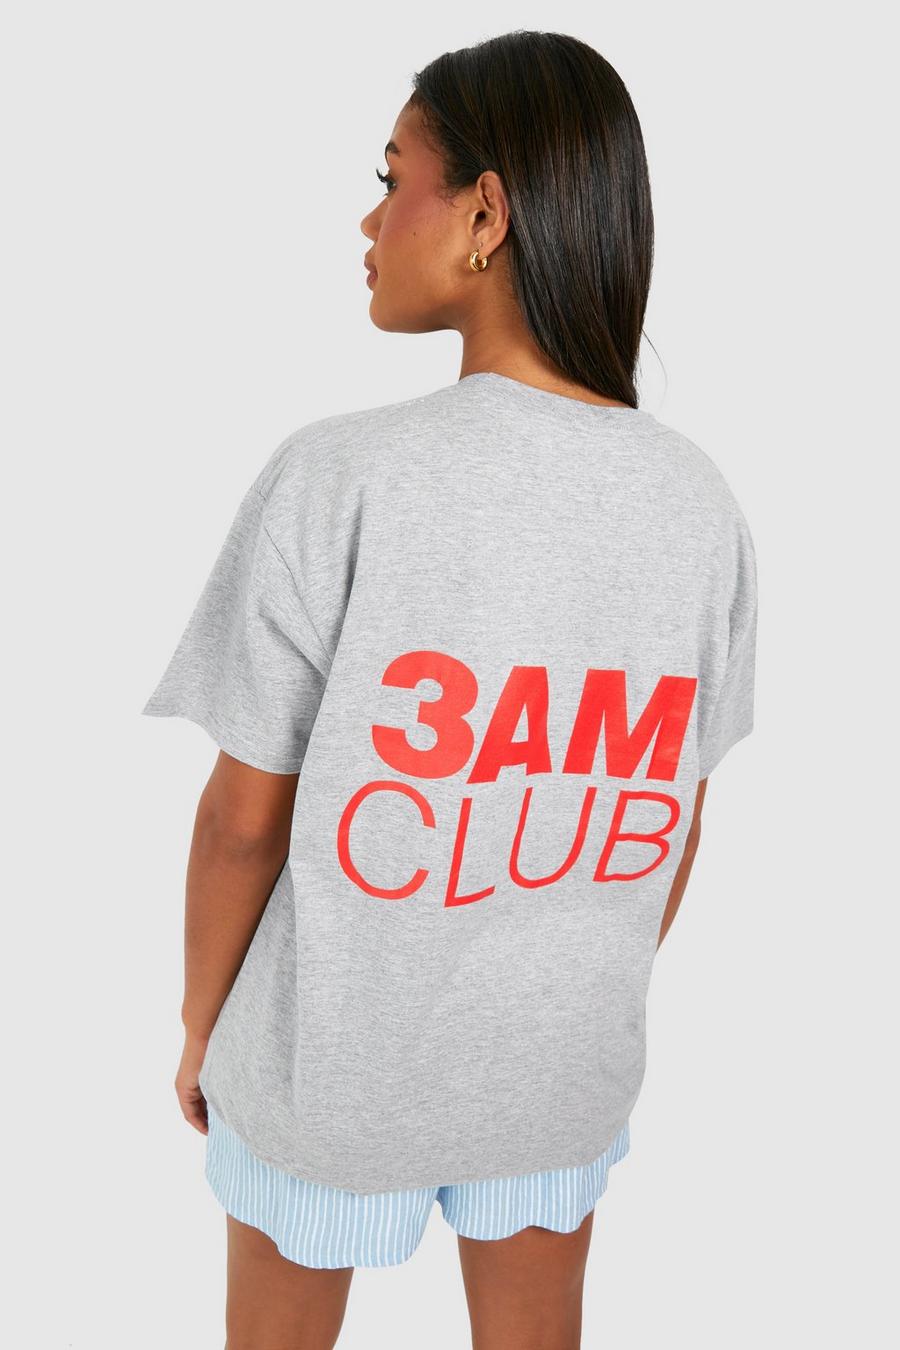 Grey Oversized Katoenen 3am Club T-Shirt